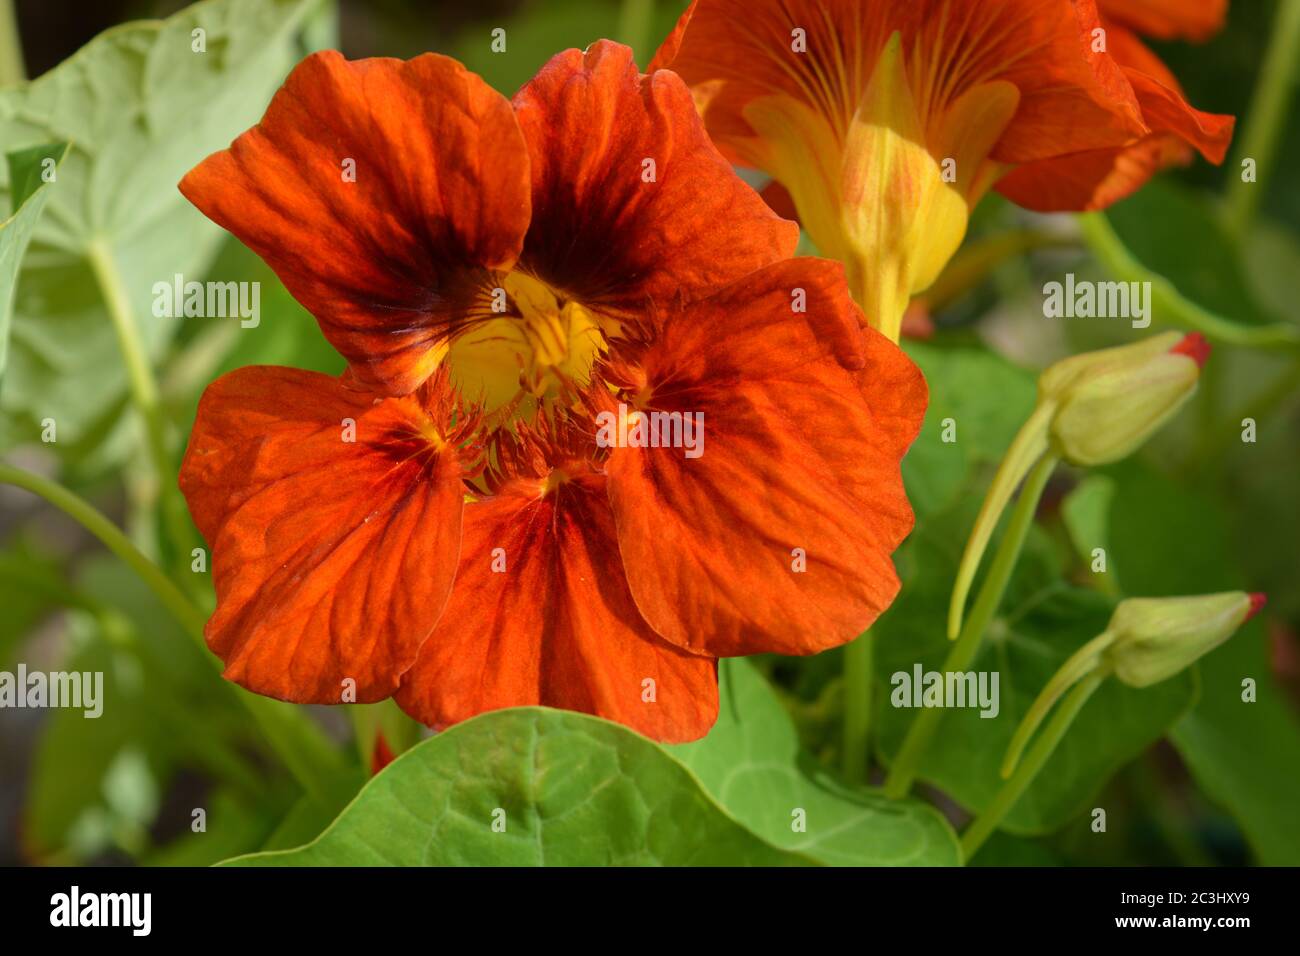 Bright Orange Common Nasturtium Flower Jewel Mix Growing In A Summer Garden Stock Photo Alamy